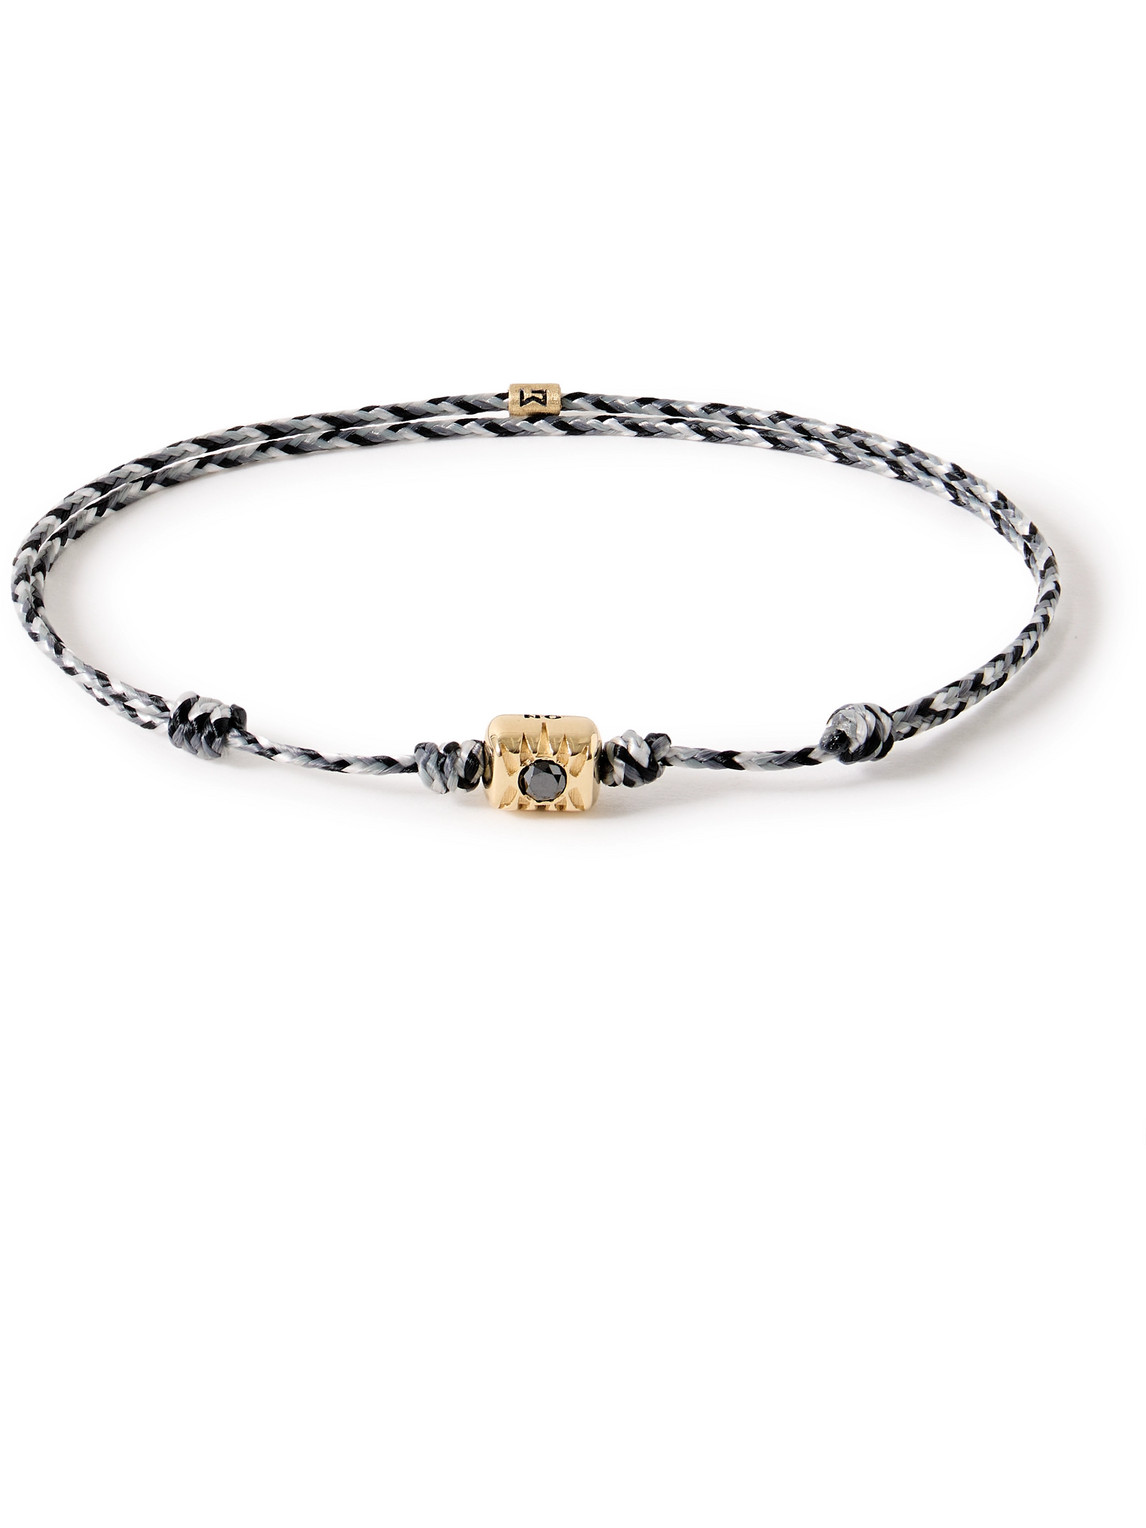 Luis Morais Gold, Diamond And Cord Bracelet In Black